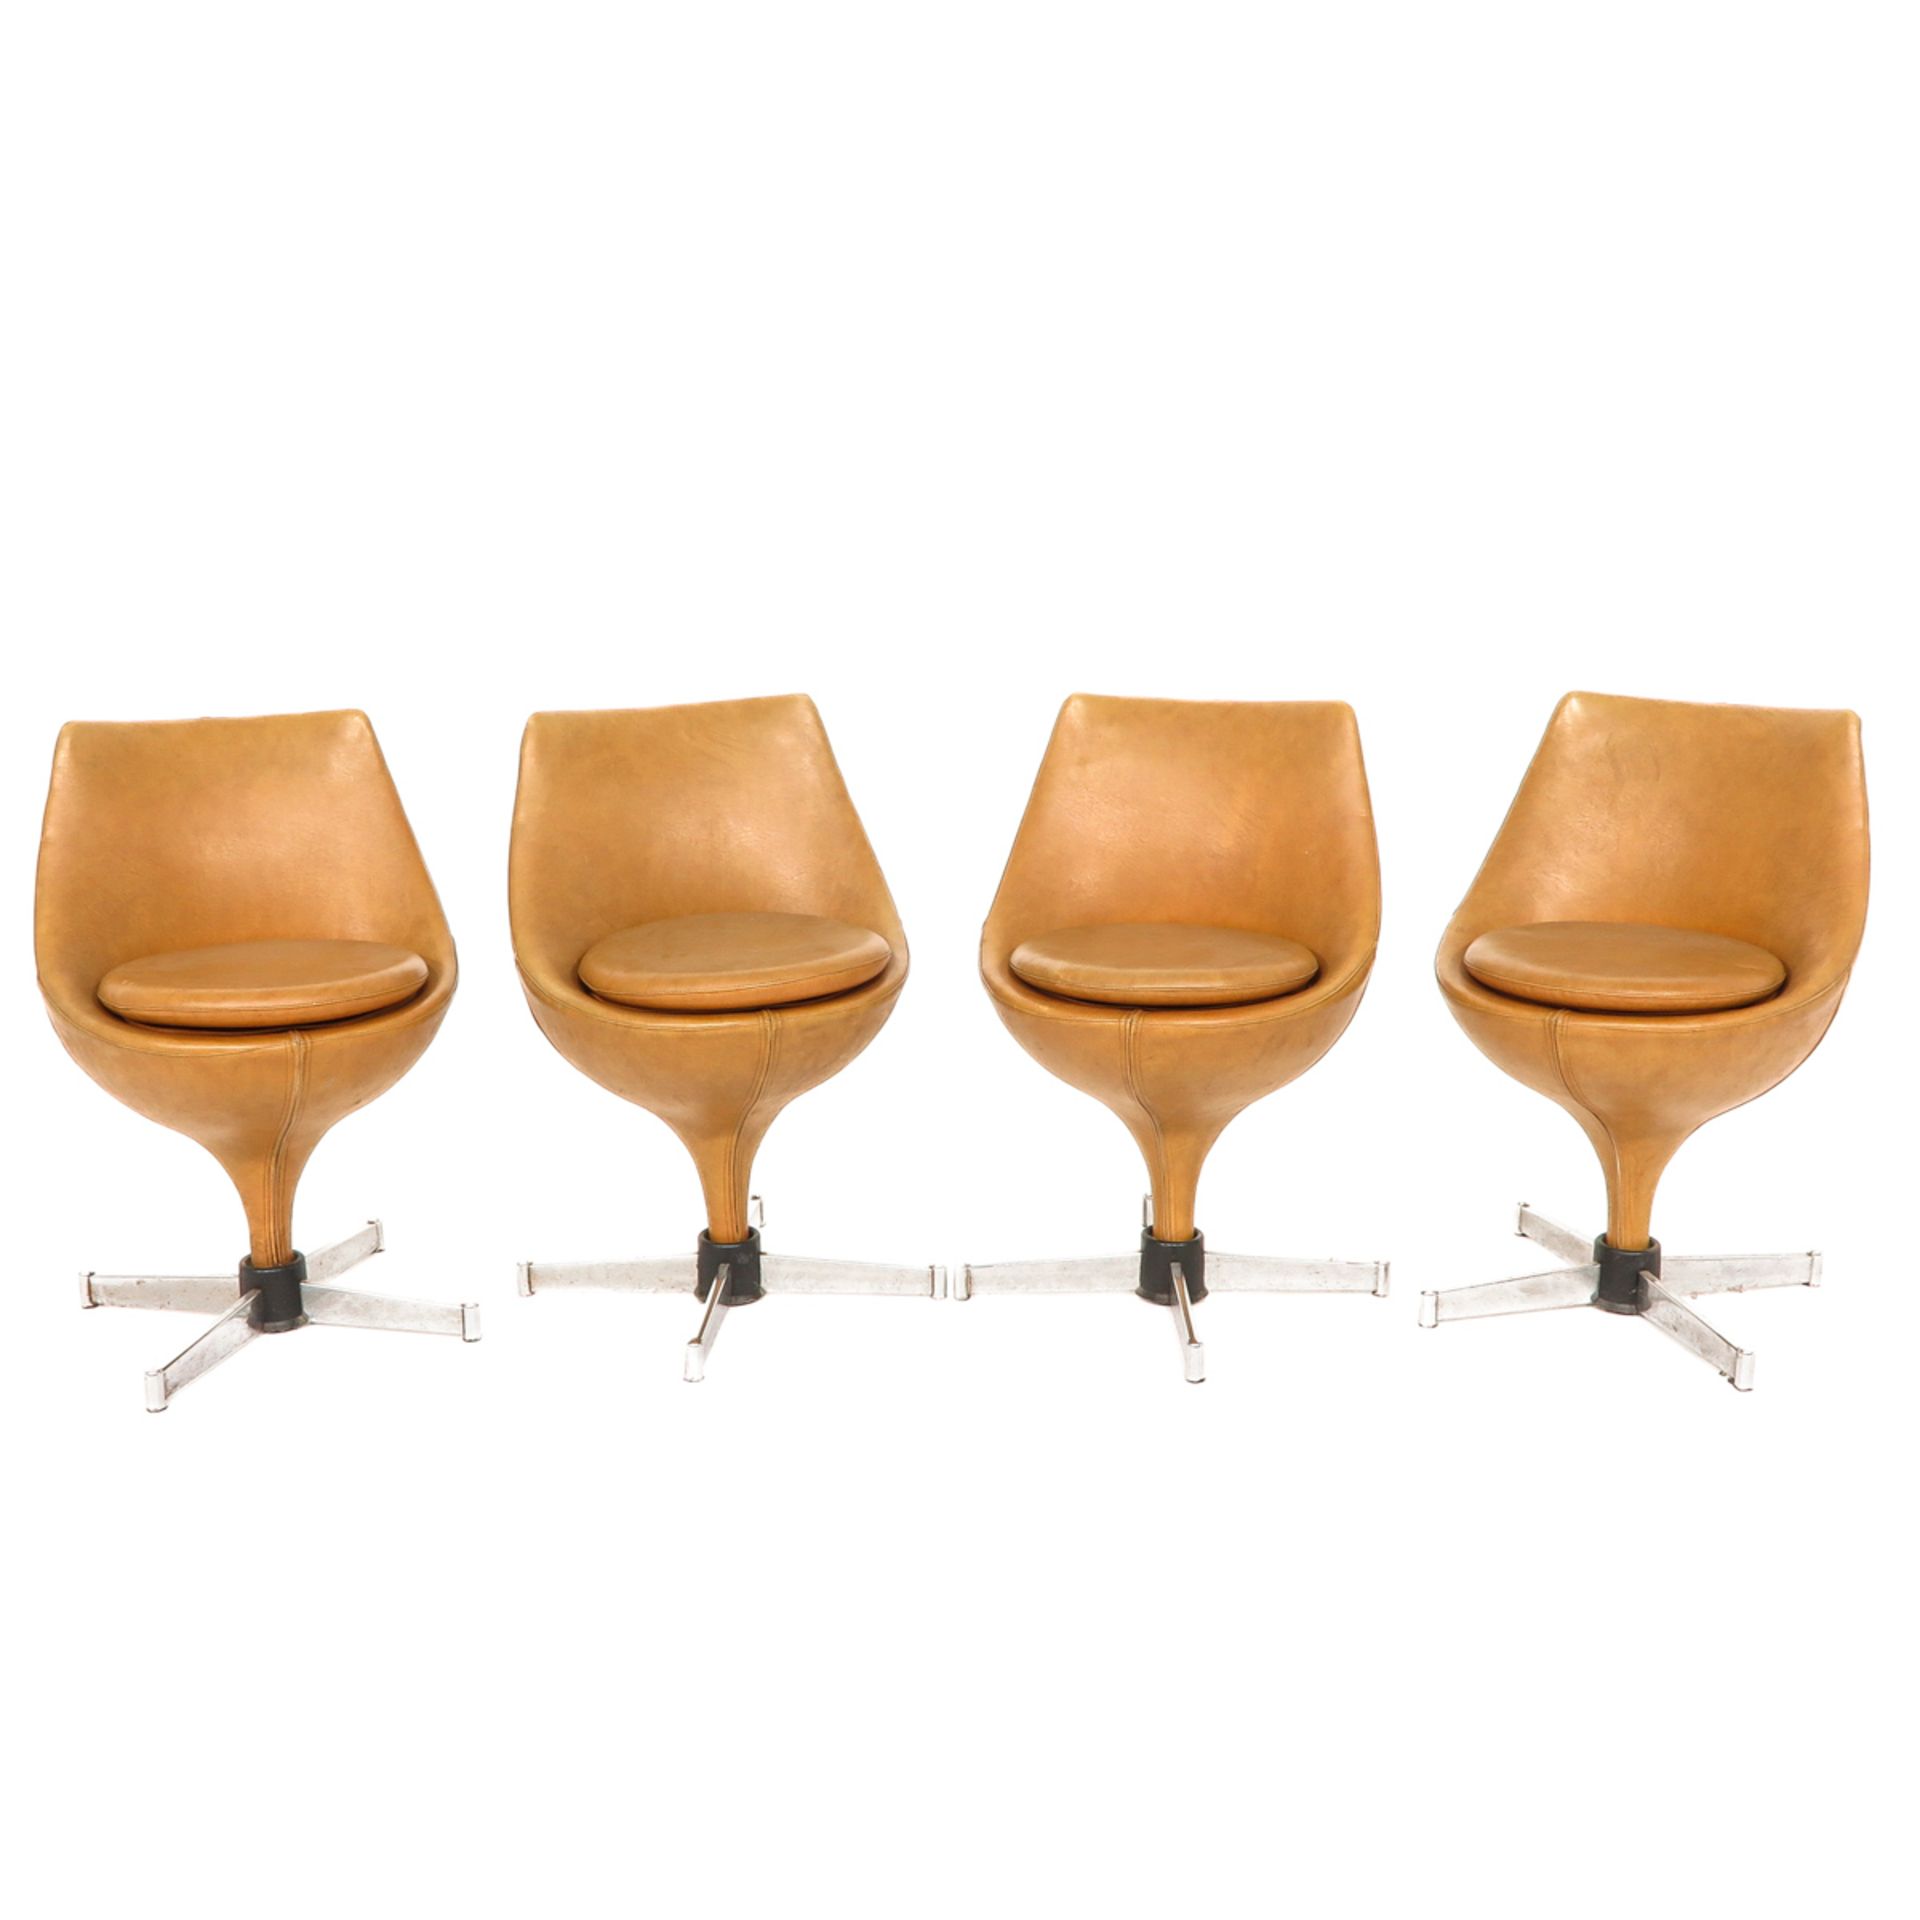 A Set of 4 Pierre Guariche Designer Chairs